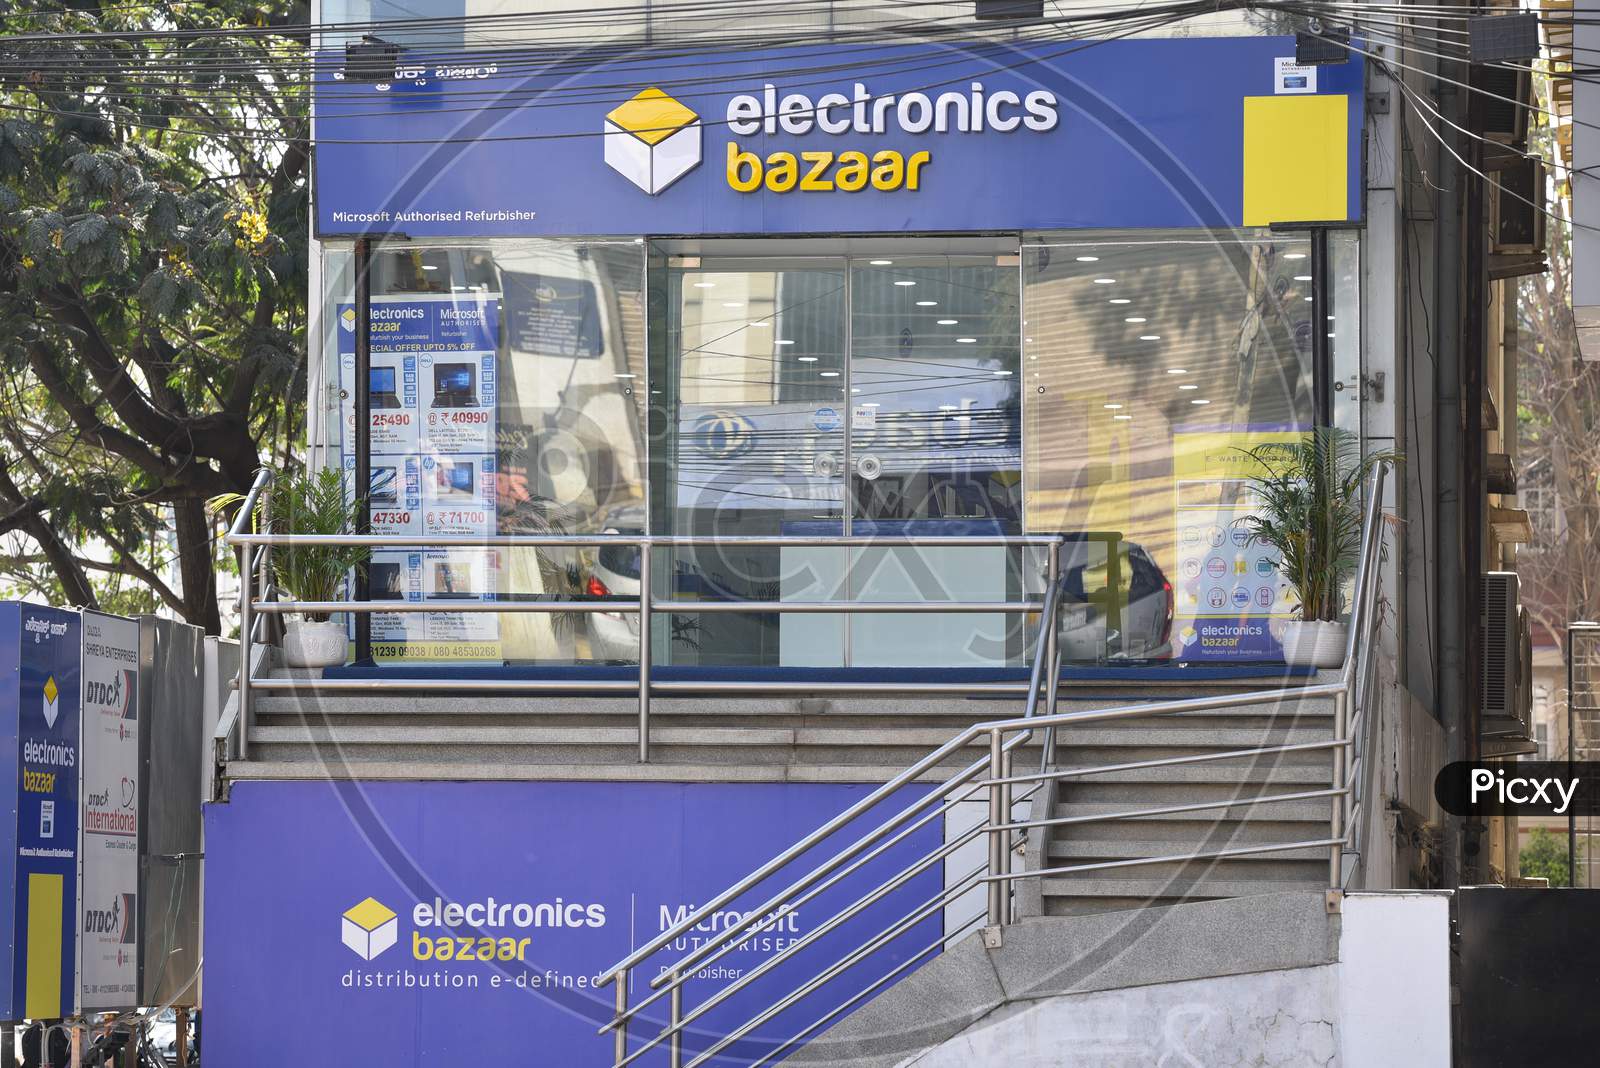 Electronics bazaar